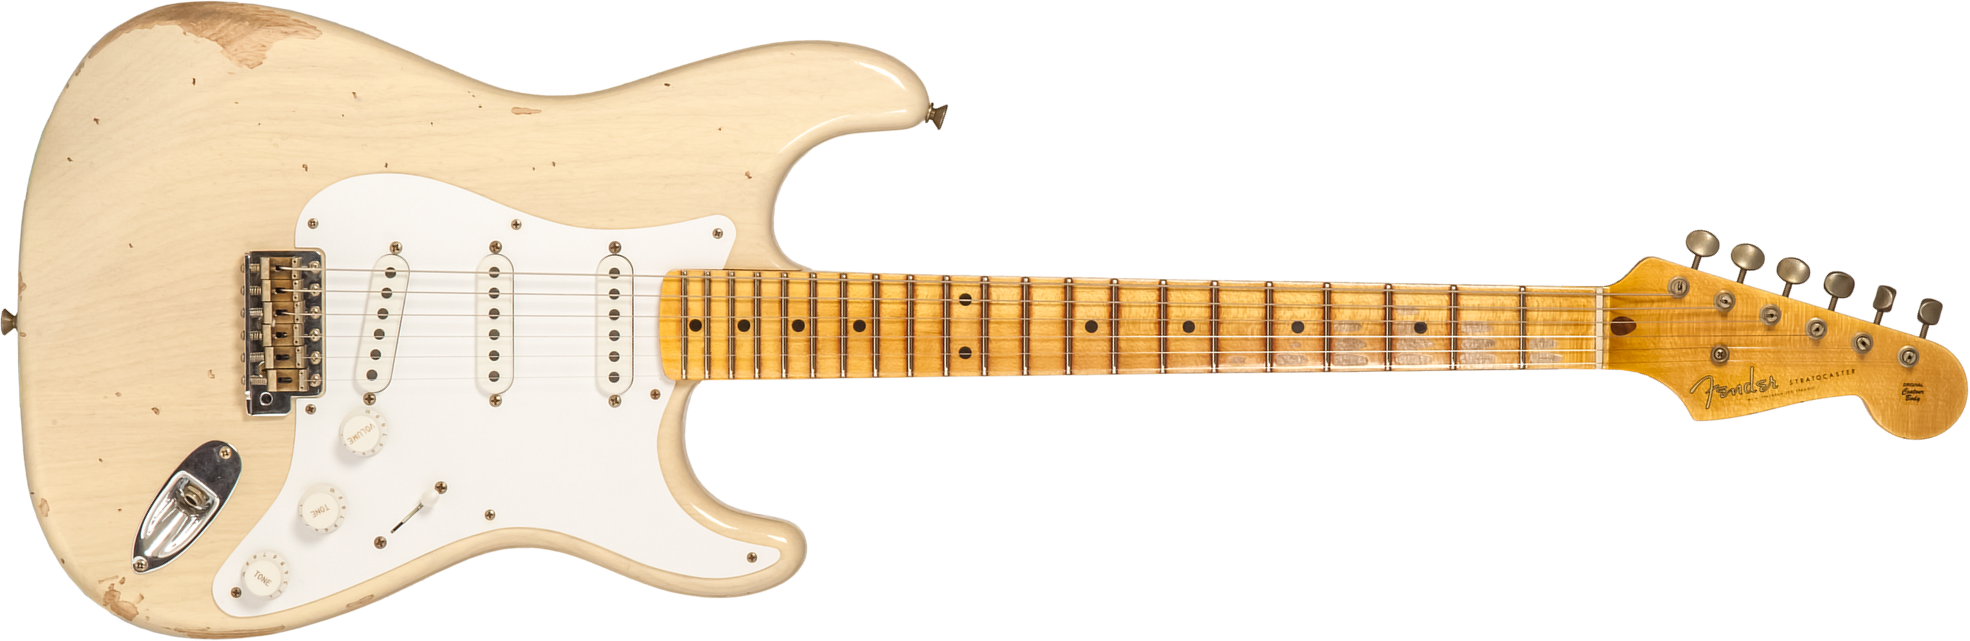 Fender Custom Shop Strat 1954 70th Anniv. 3s Trem Mn #xn4342 - Relic Vintage Blonde - E-Gitarre in Str-Form - Main picture